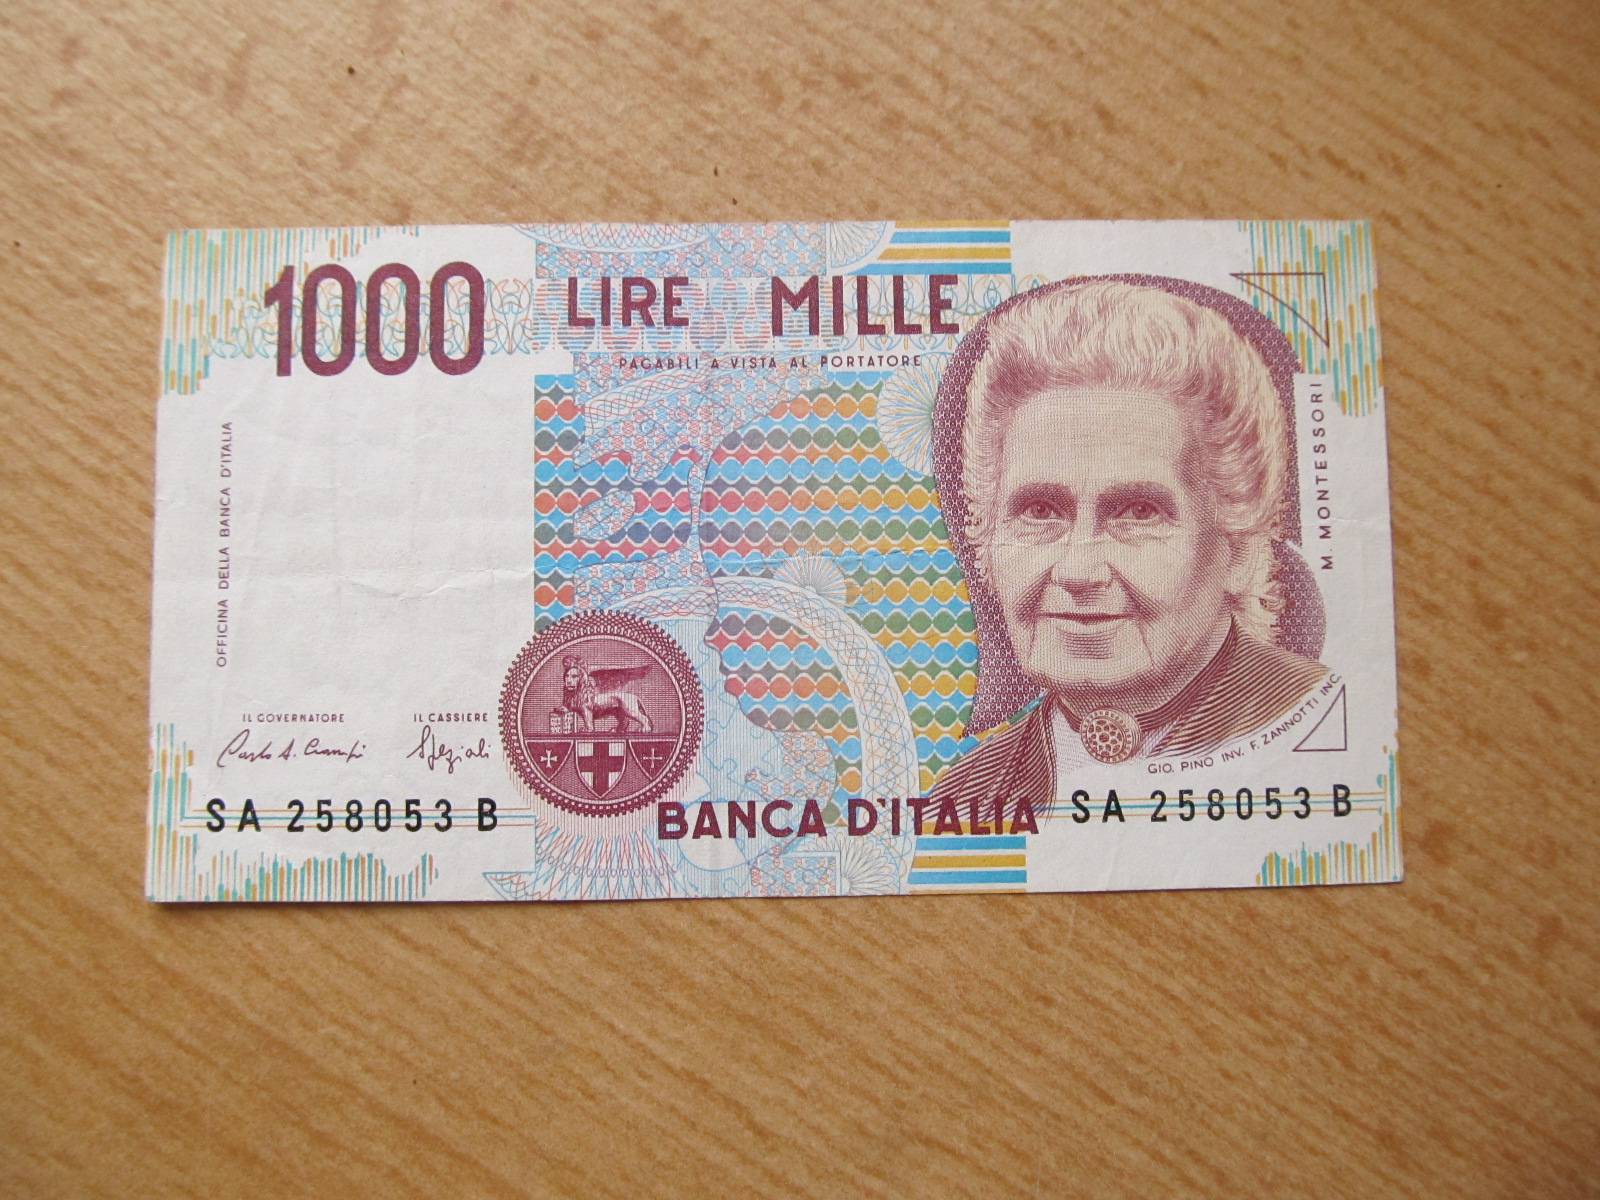 5 тысяч лир. 1000 Лир 1990. 10 Лир Италия банкнота. 1000 Lire Mille в рублях на сегодня. Lire.